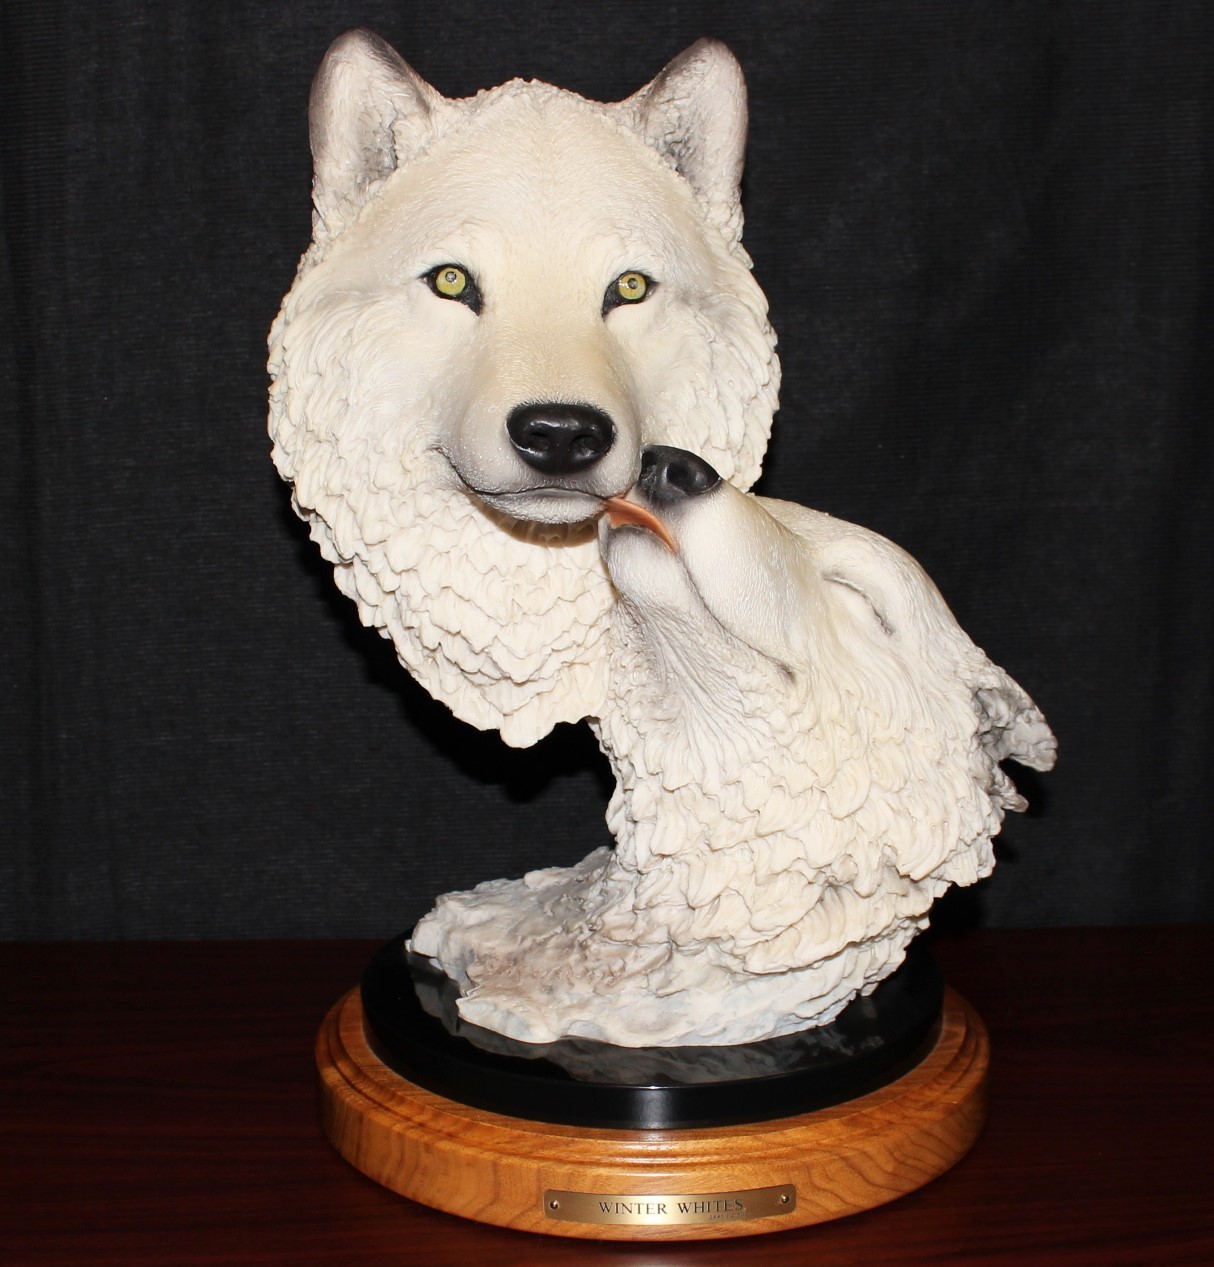 Joe Slockbower 17” Wolf Sculpture “Winter Whites” 2441/2500 Mill Creek Statue